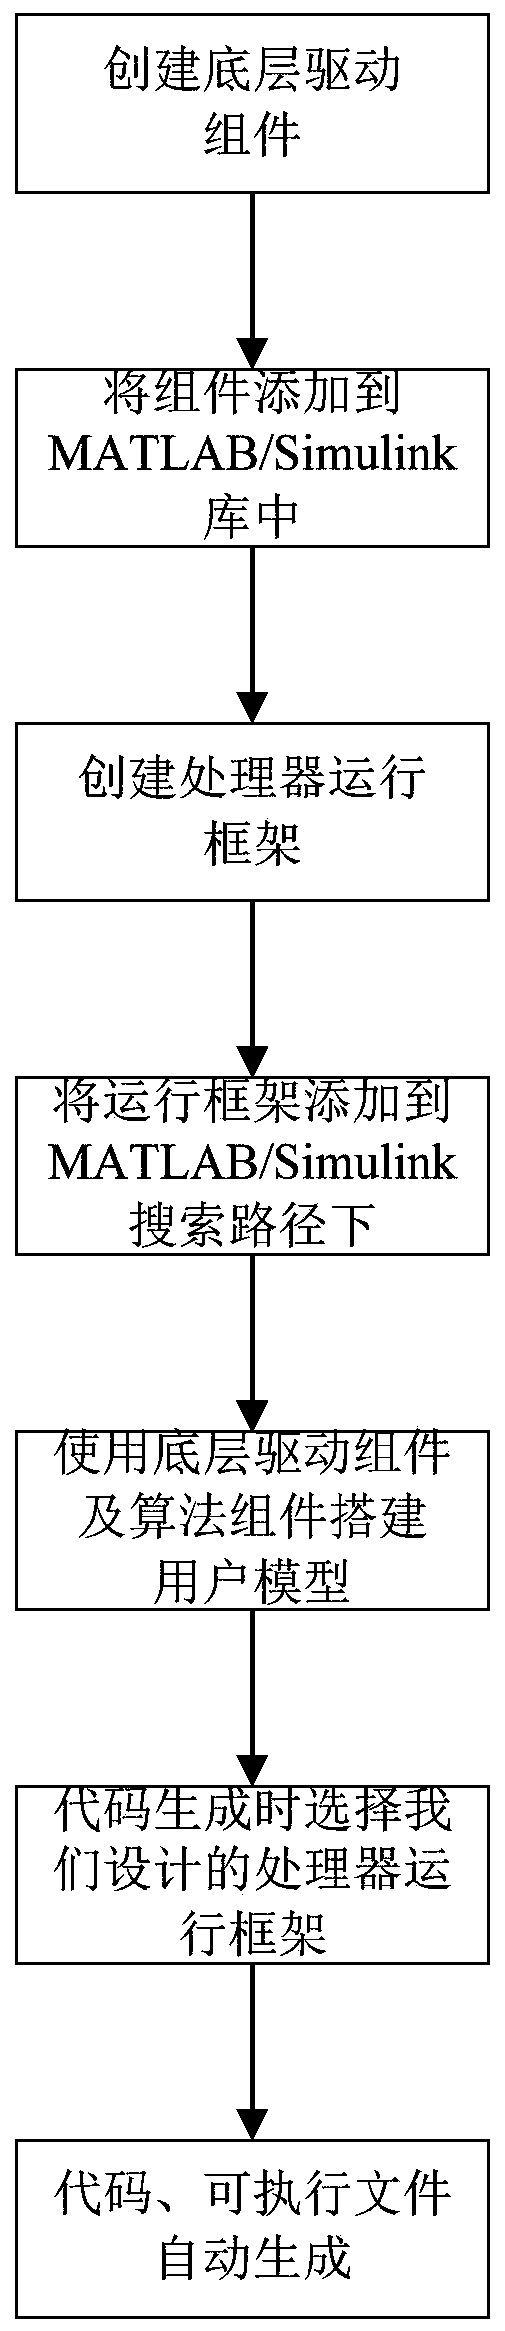 Full-model executable program construction method based on MATLAB (Matrix Laboratory)/Simulink